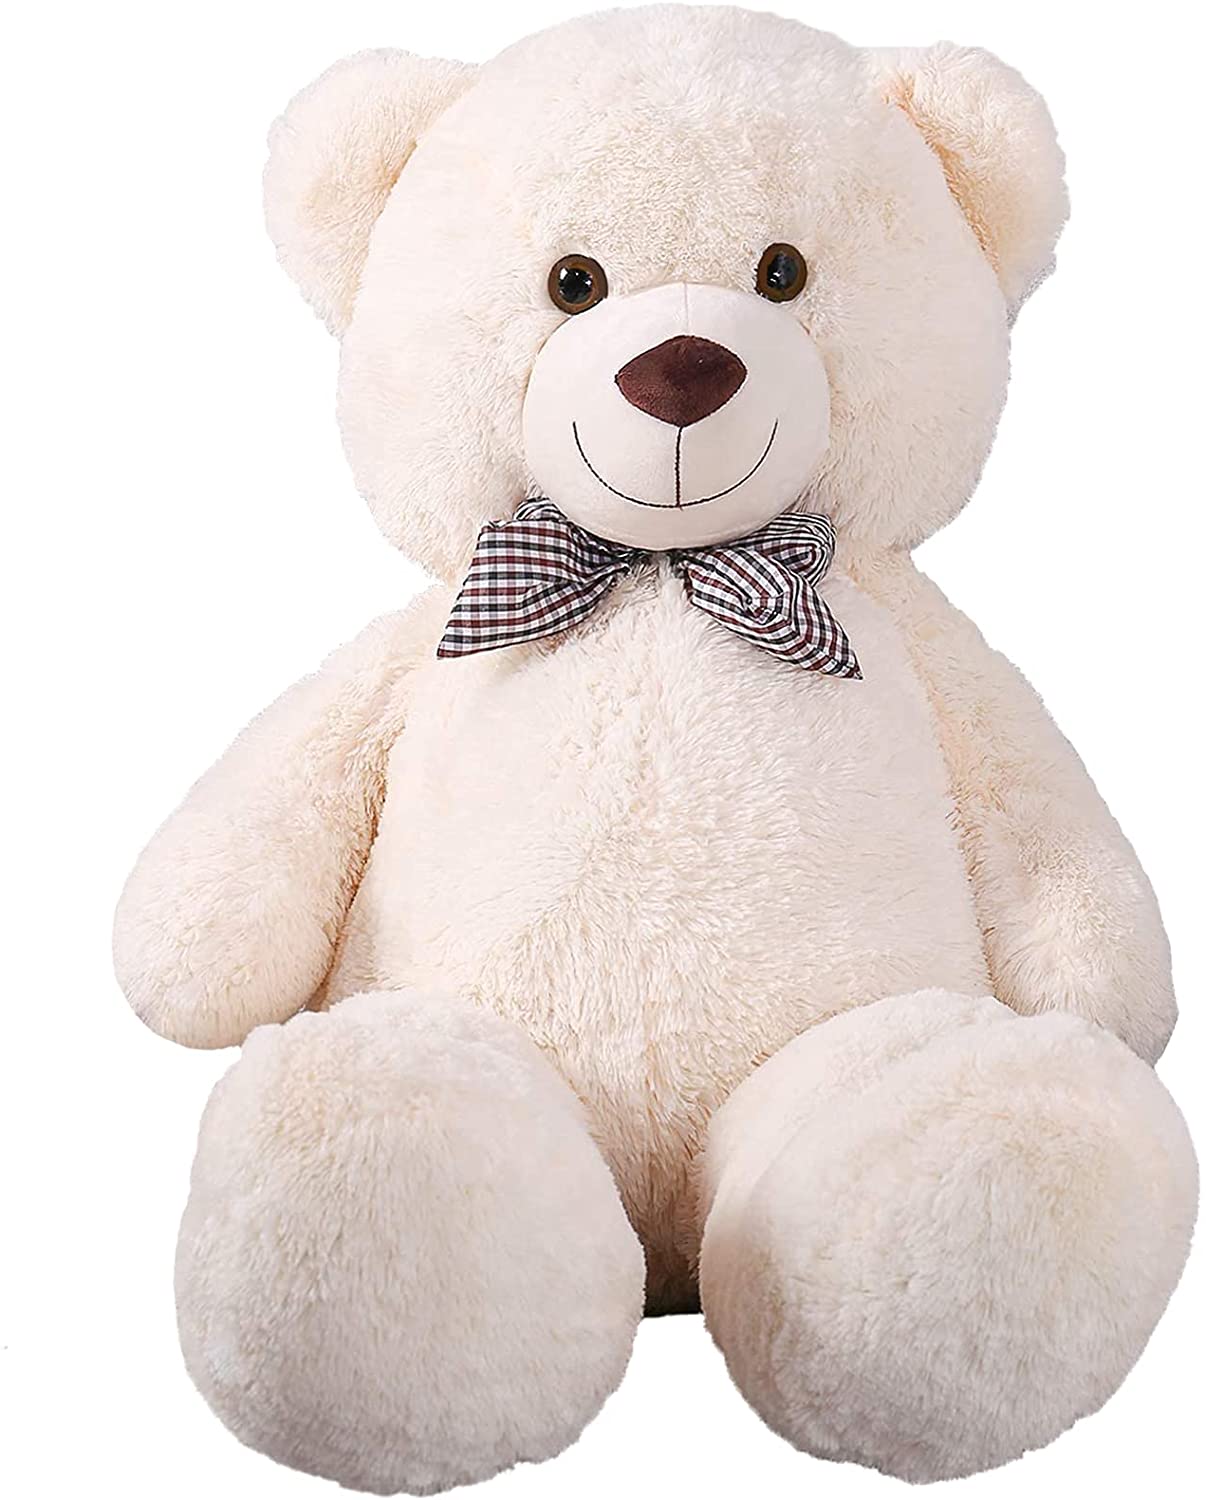 Big Jumbo Stuffed Animal Soft Plush Kids Christmas Toy Gift Large Teddy Bear 